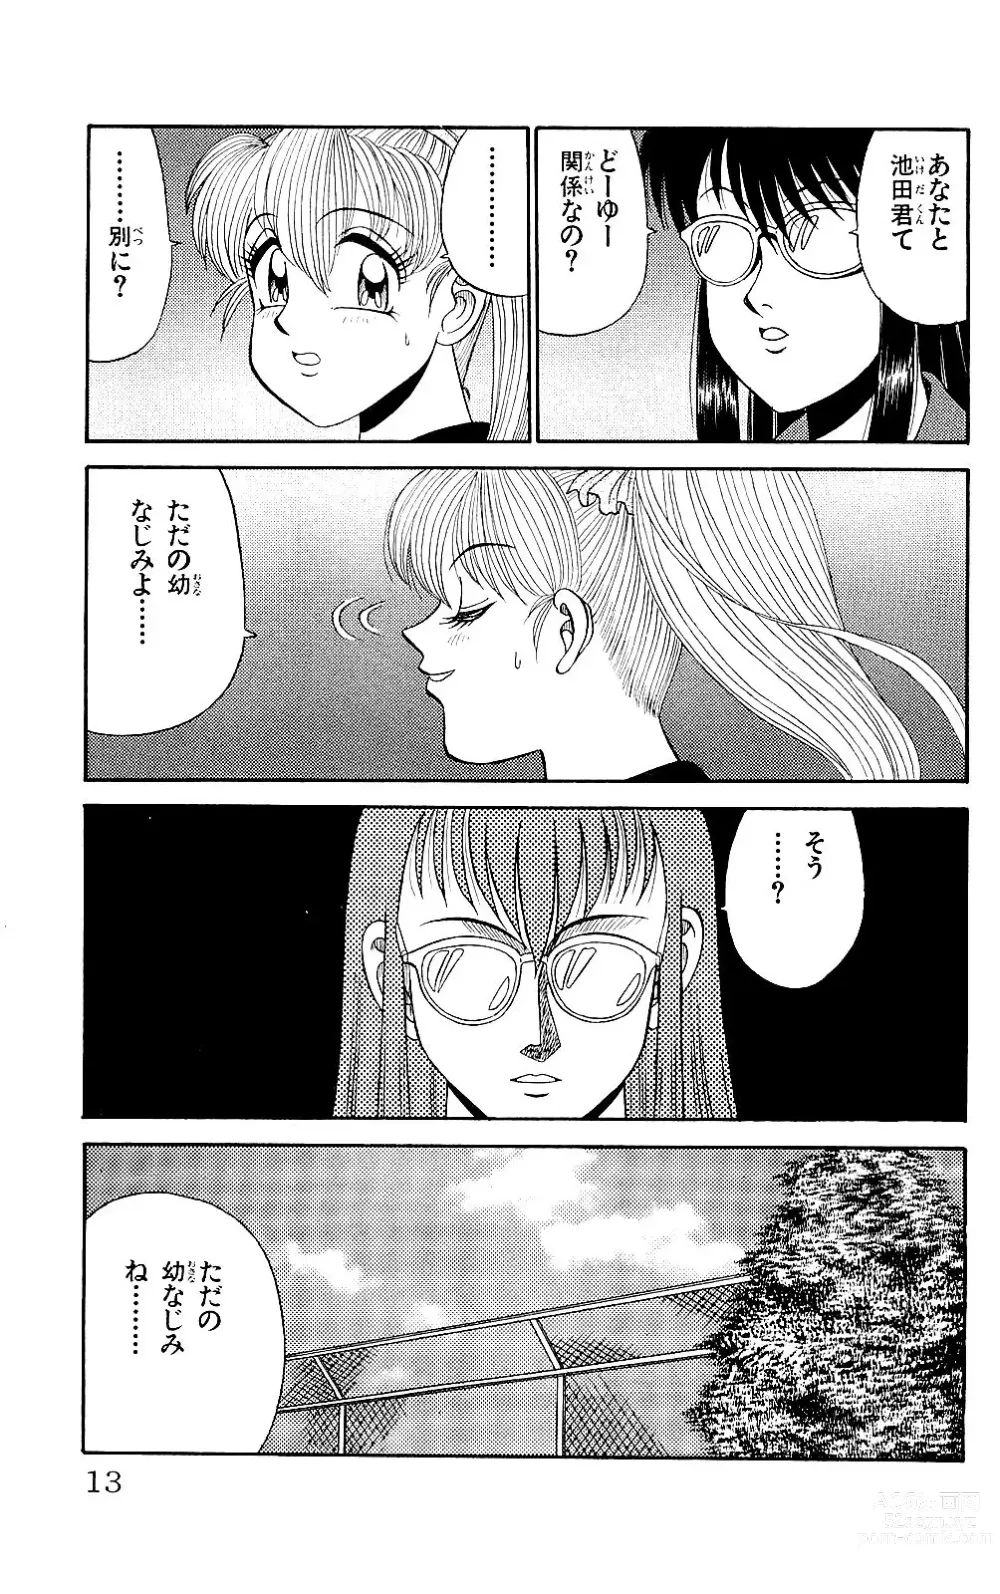 Page 11 of manga Orette Piyoritan 05